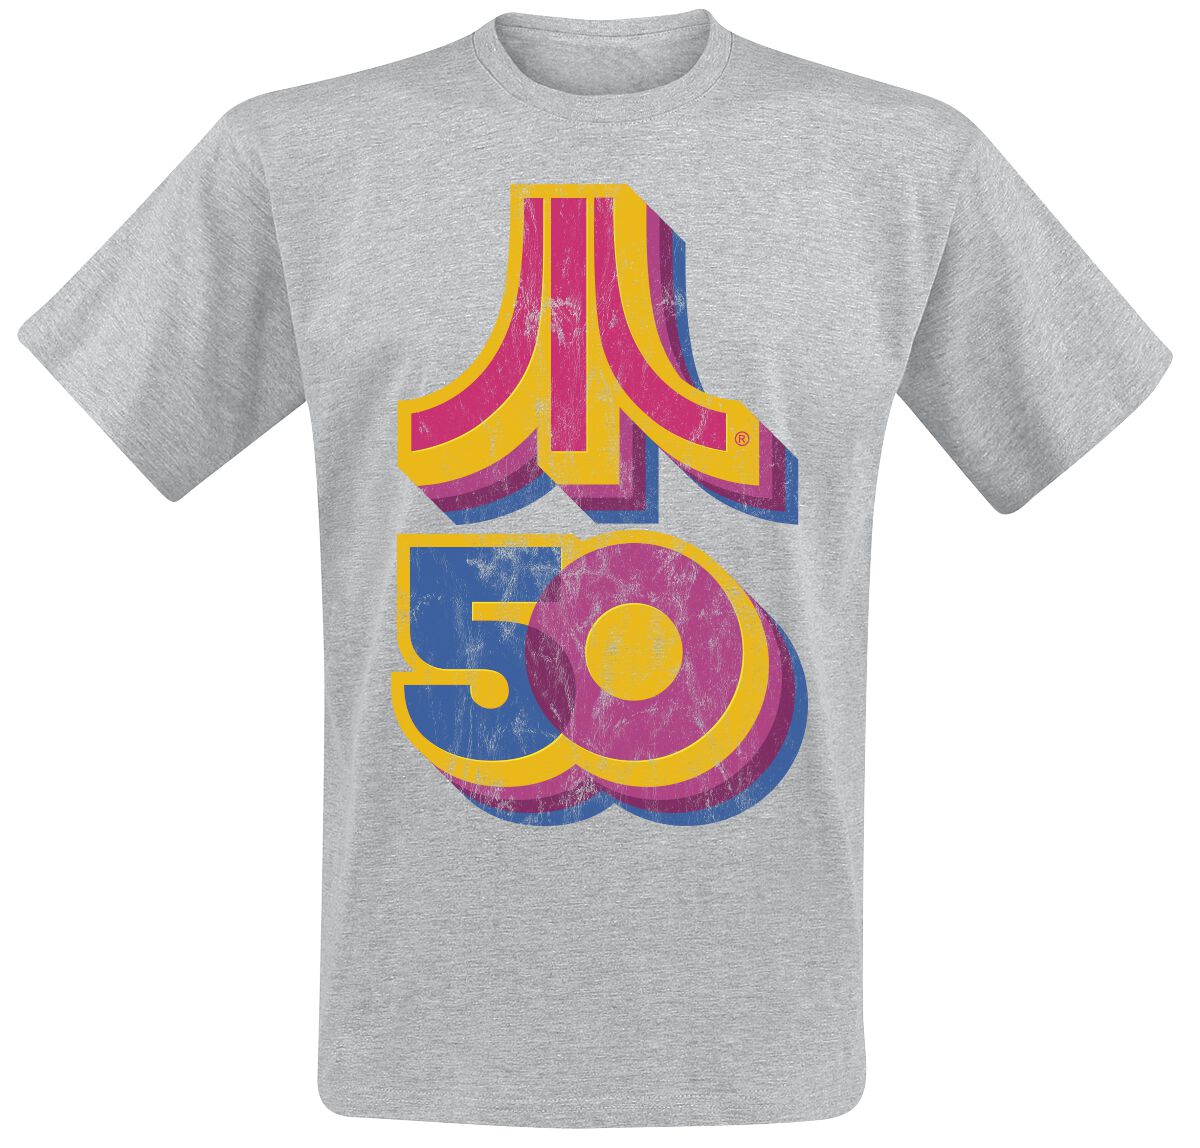 Atari 50th Anniversary T-Shirt grey